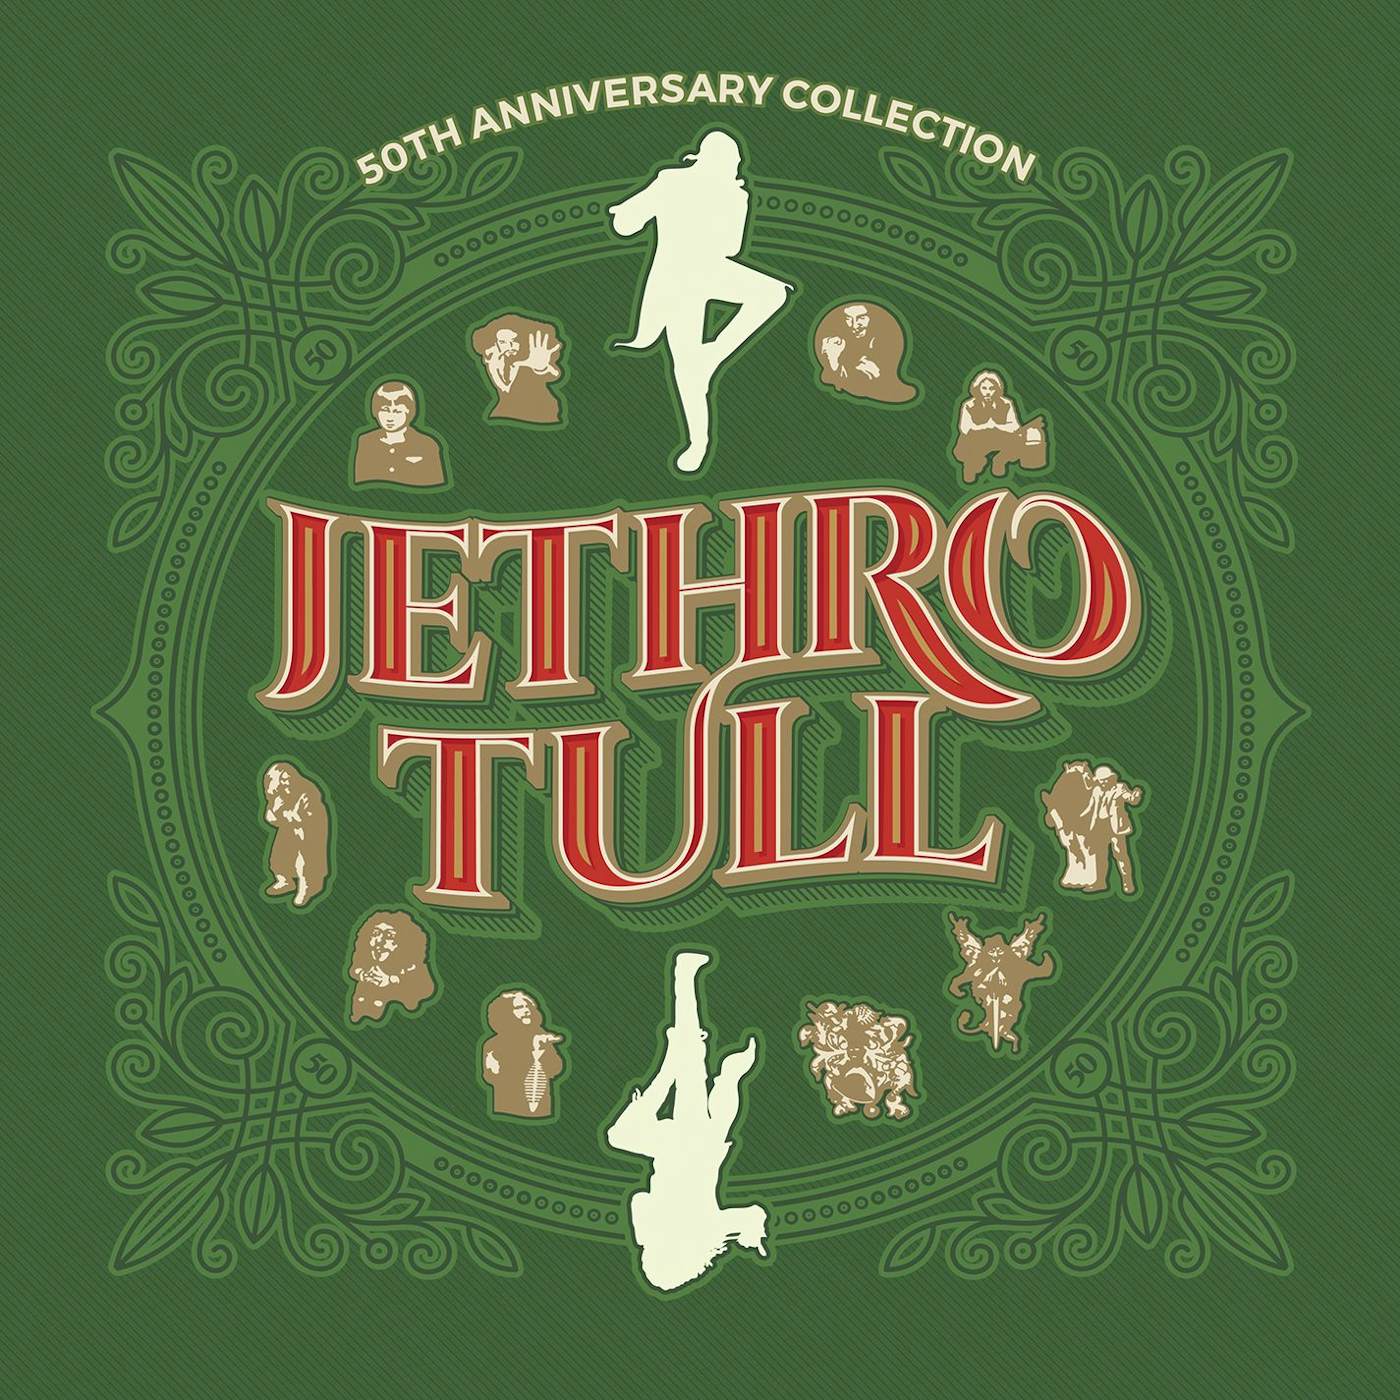 Jethro Tull 50th Anniversary Collection Vinyl Record